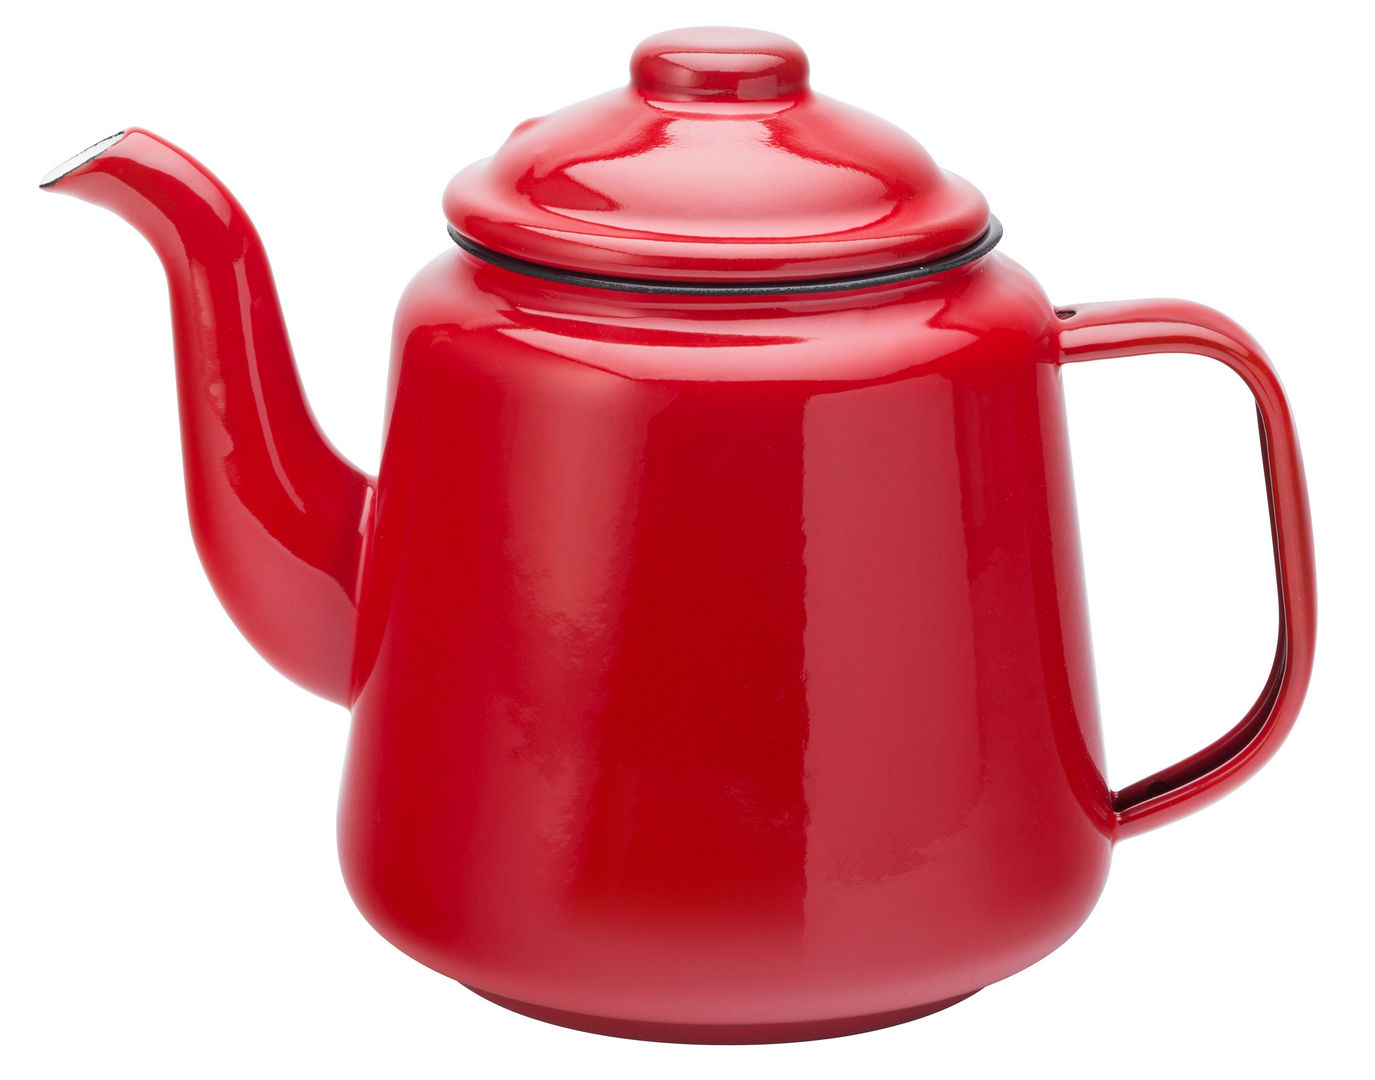 Eagle Enamel Red Teapot 1 Litre - F51009-000000-B01002 (Pack of 2)